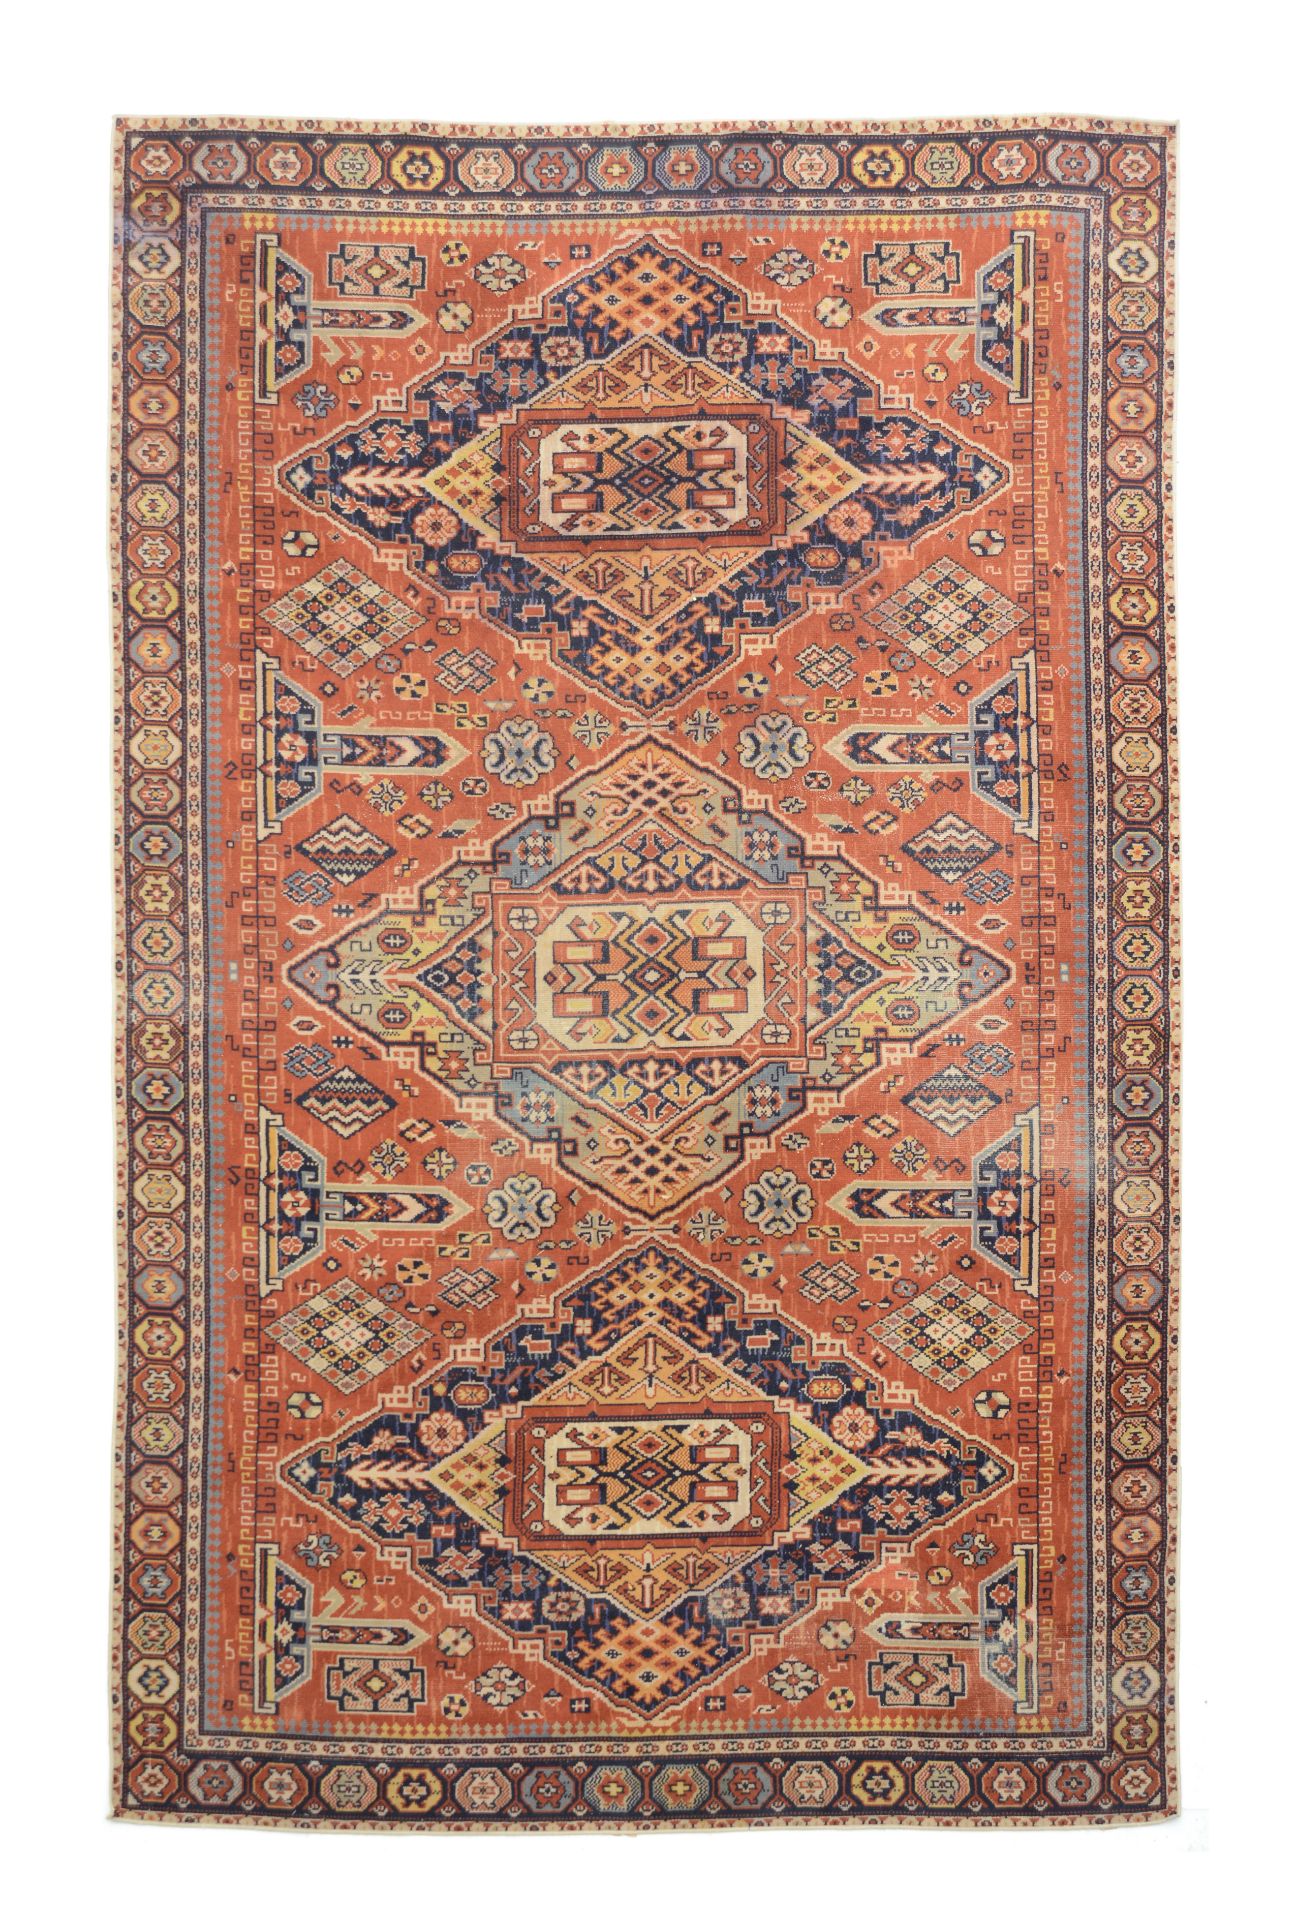 A rug, Pakistan